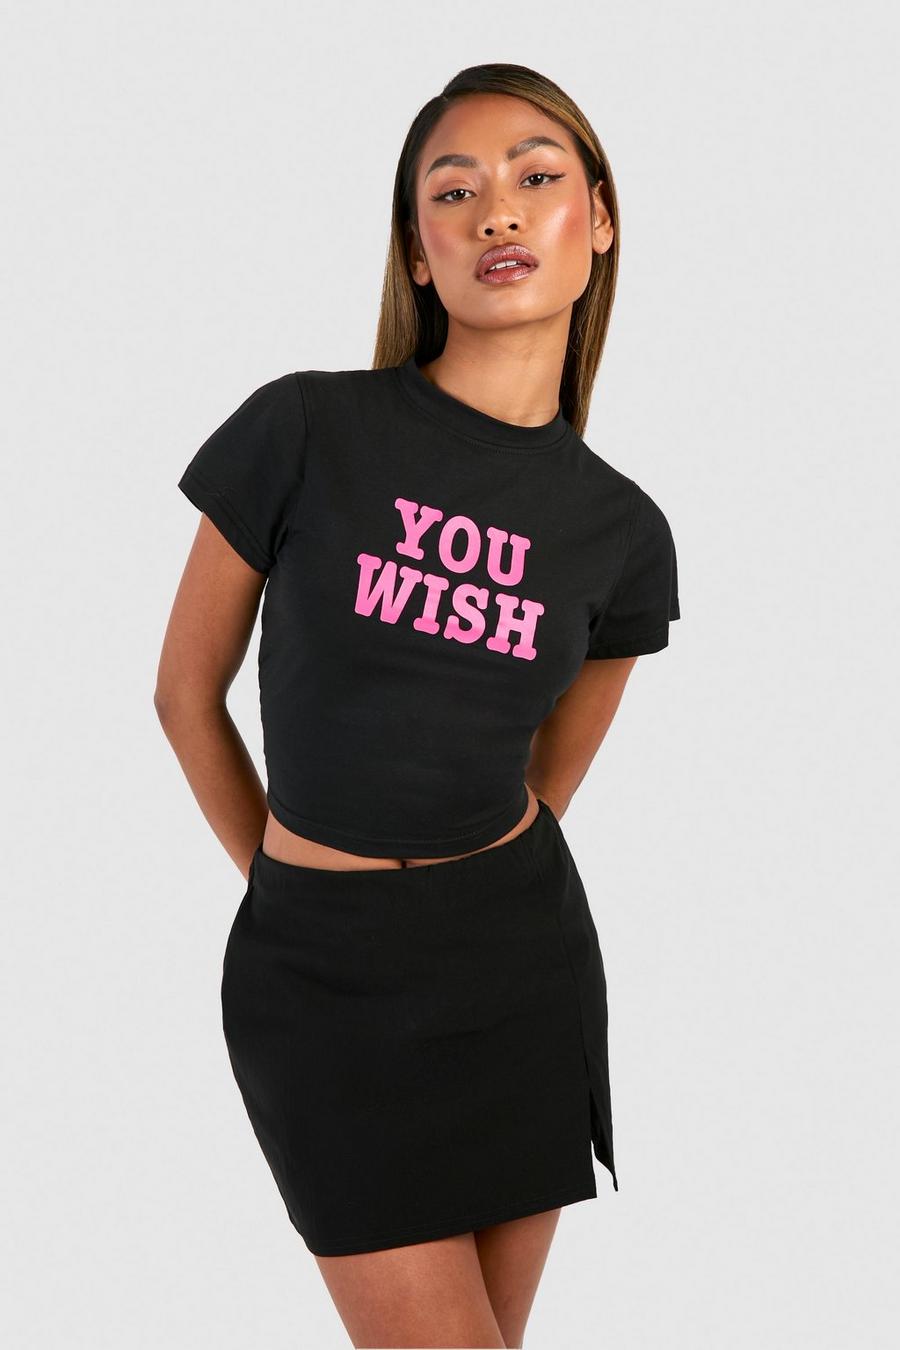 T-shirt You Wish Baby, Black